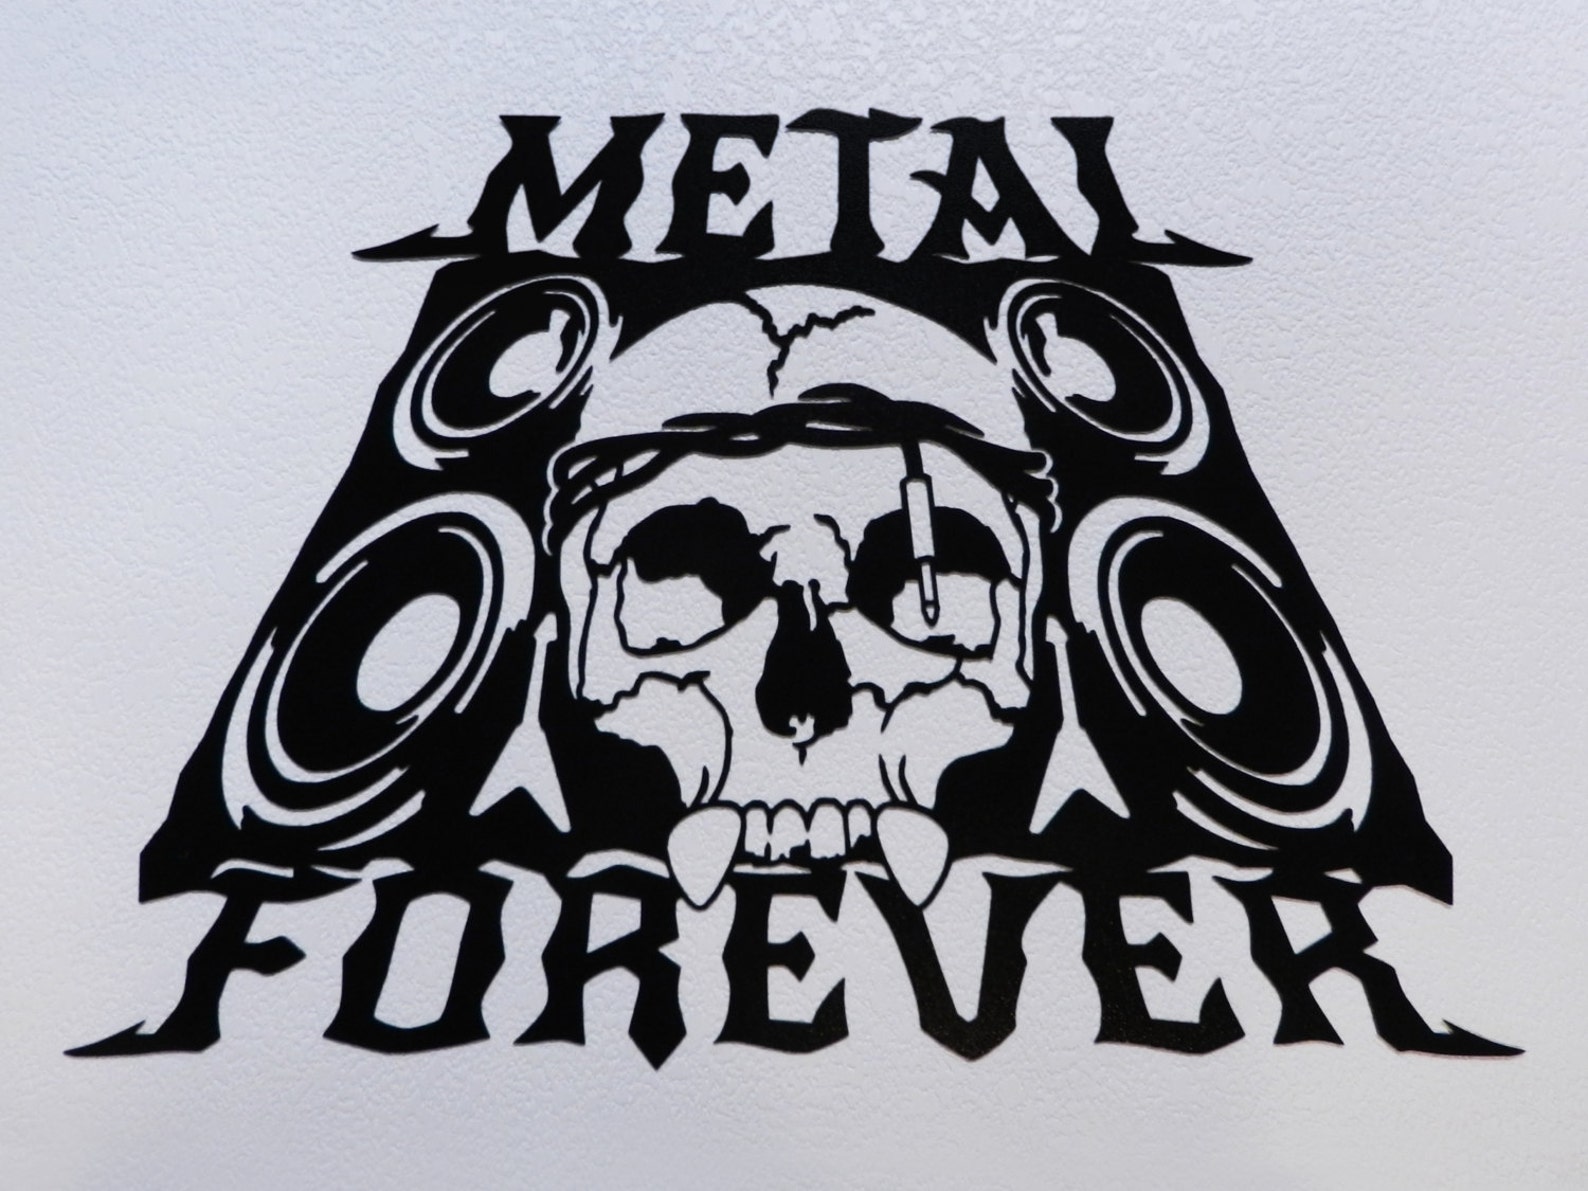 Черно белый логотип Forever Metal картинки. Metal Forever tumblr. Say metal